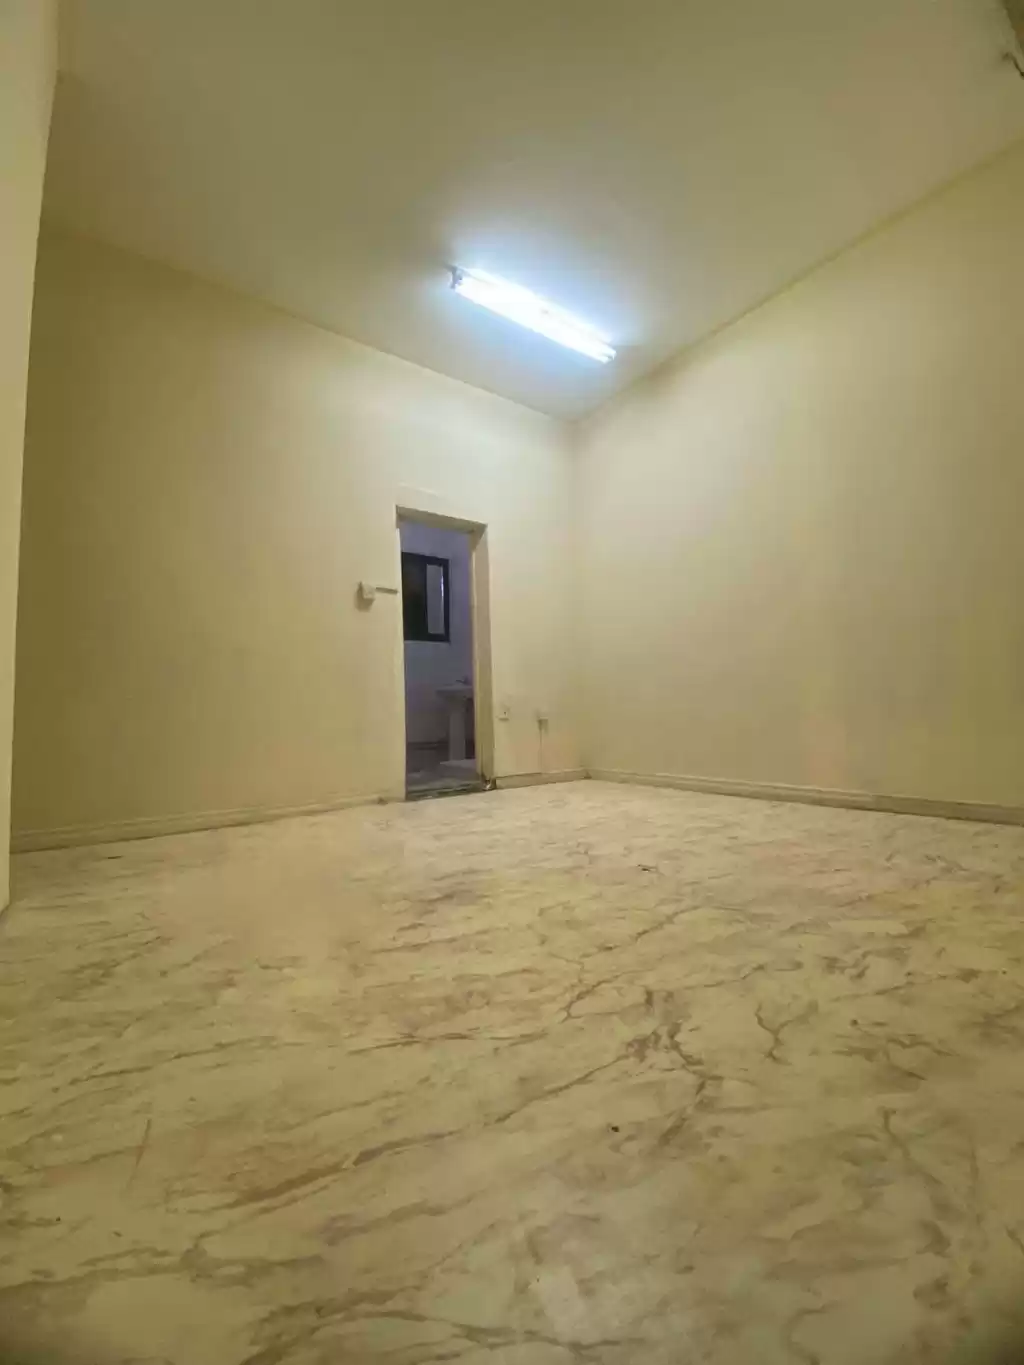 Résidentiel Propriété prête Studio U / f Appartement  a louer au Al-Sadd , Doha #13376 - 1  image 